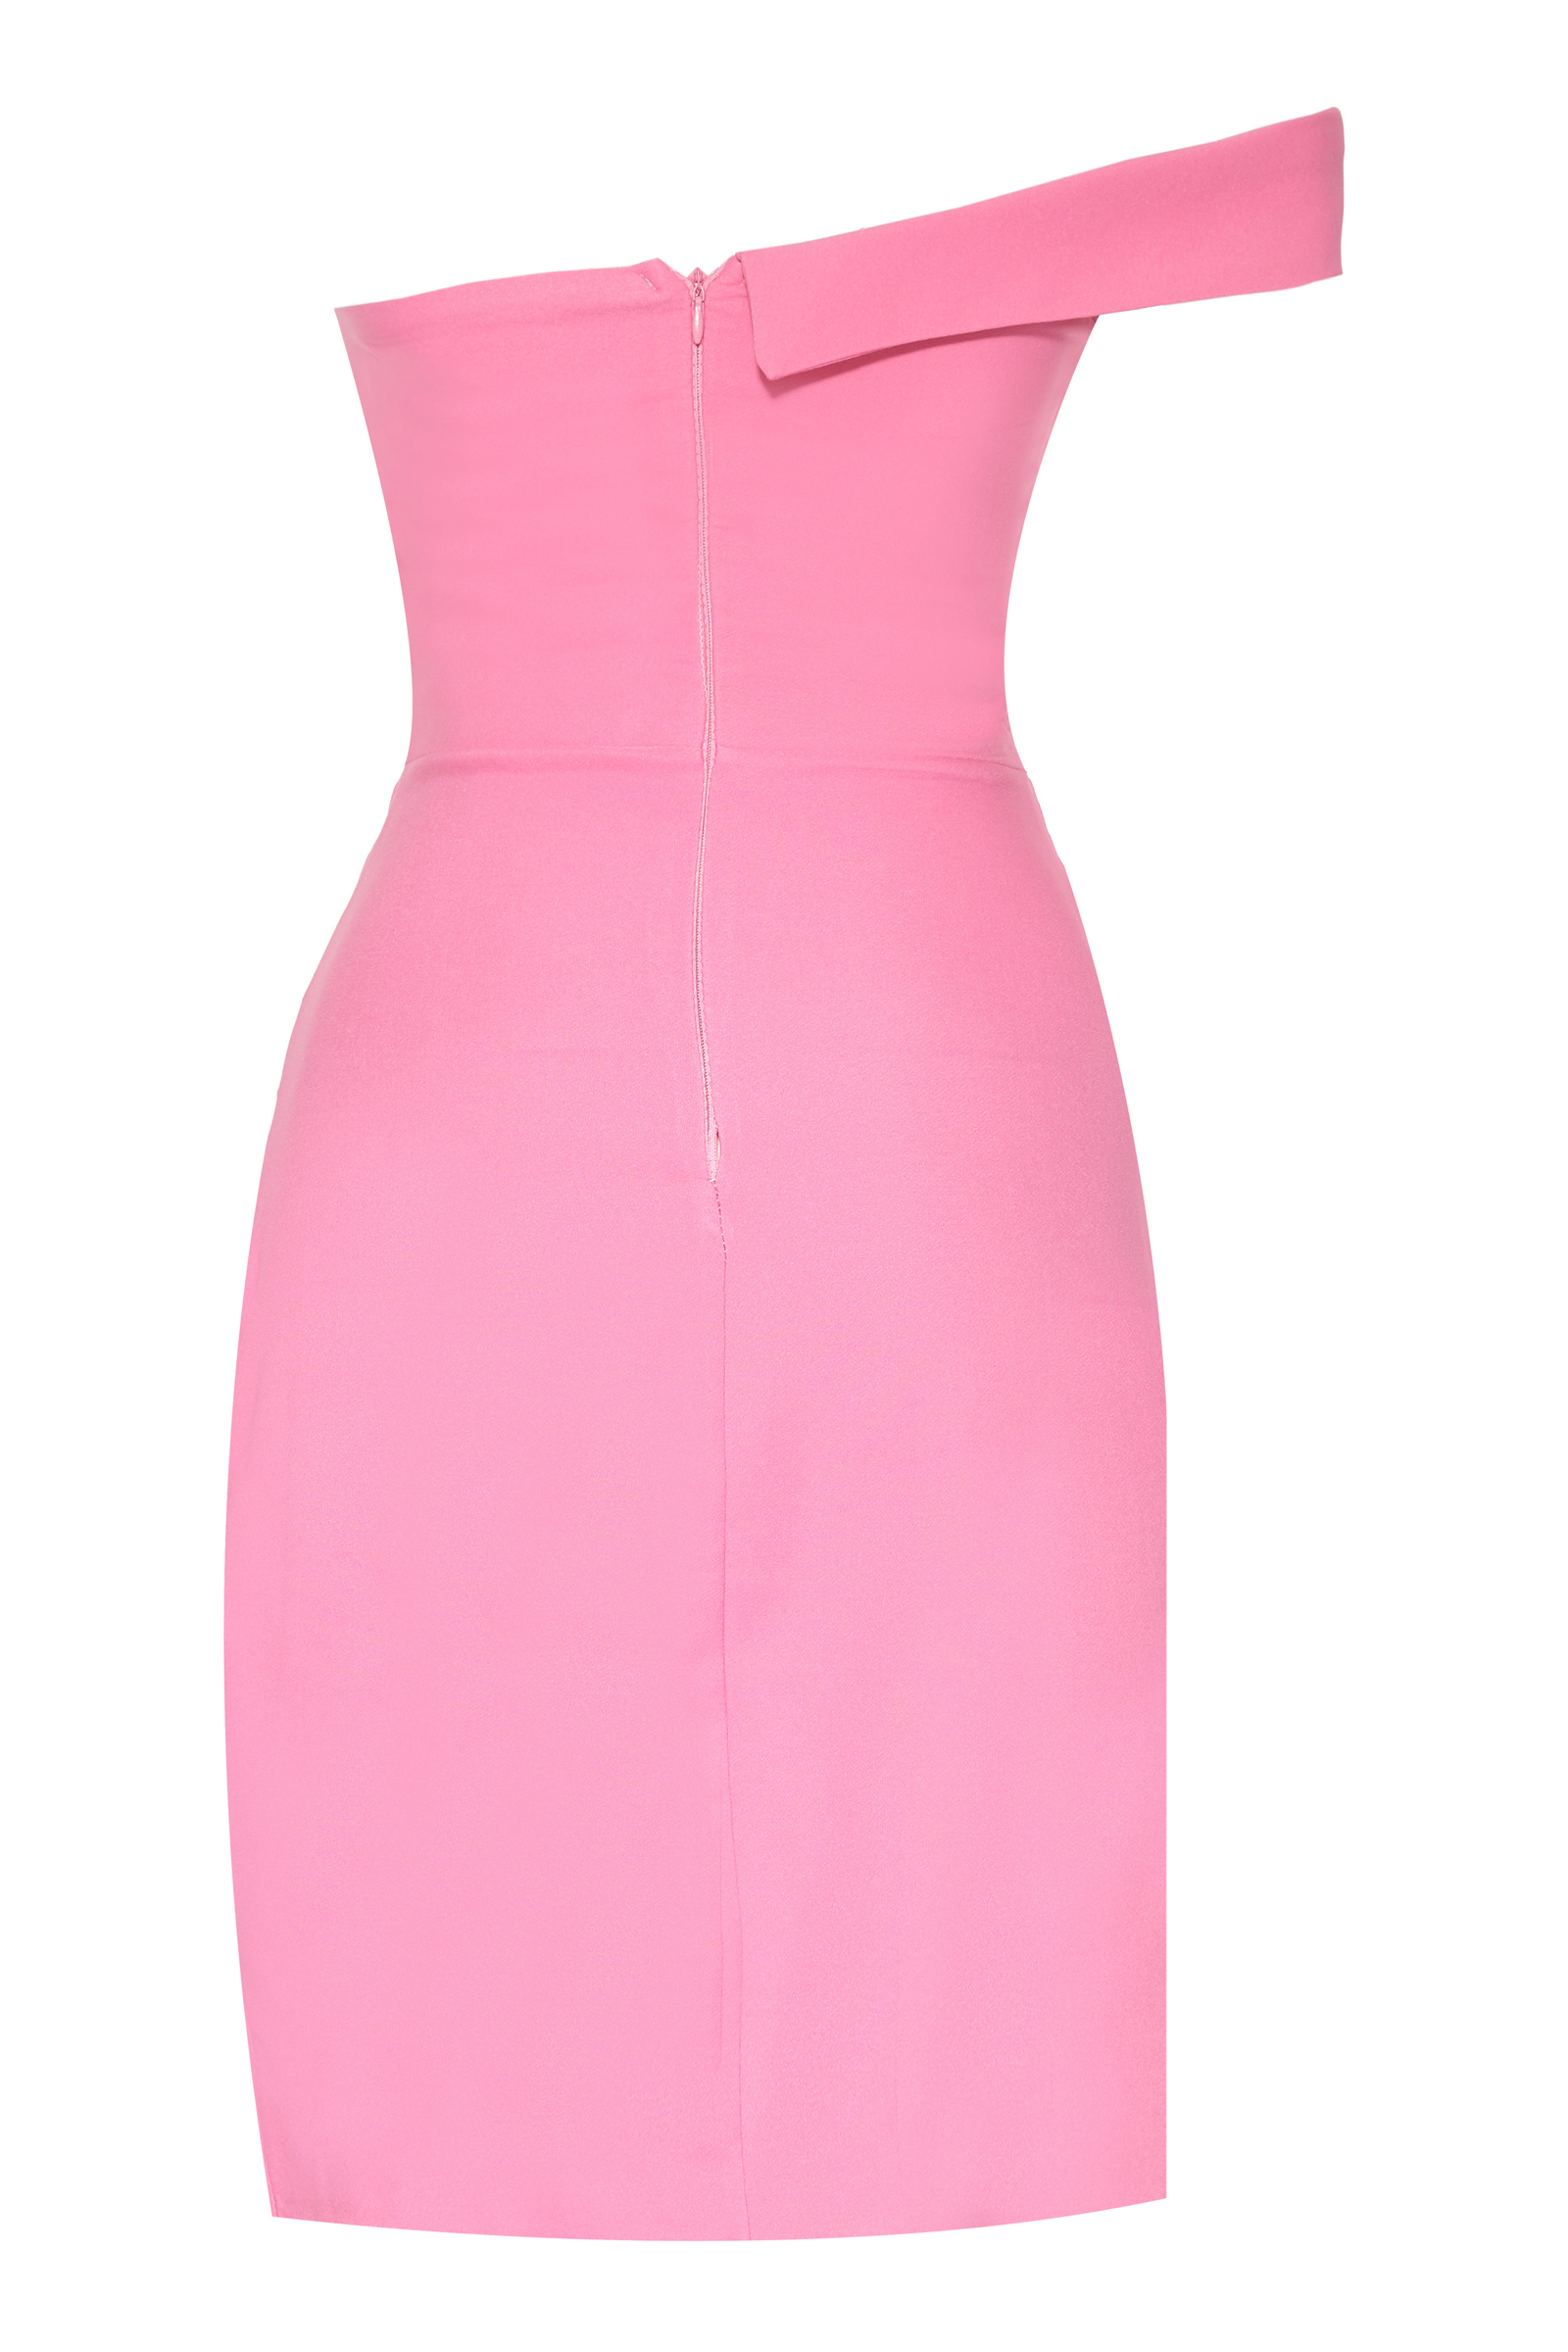 Pink crepe short sleeve mini dress